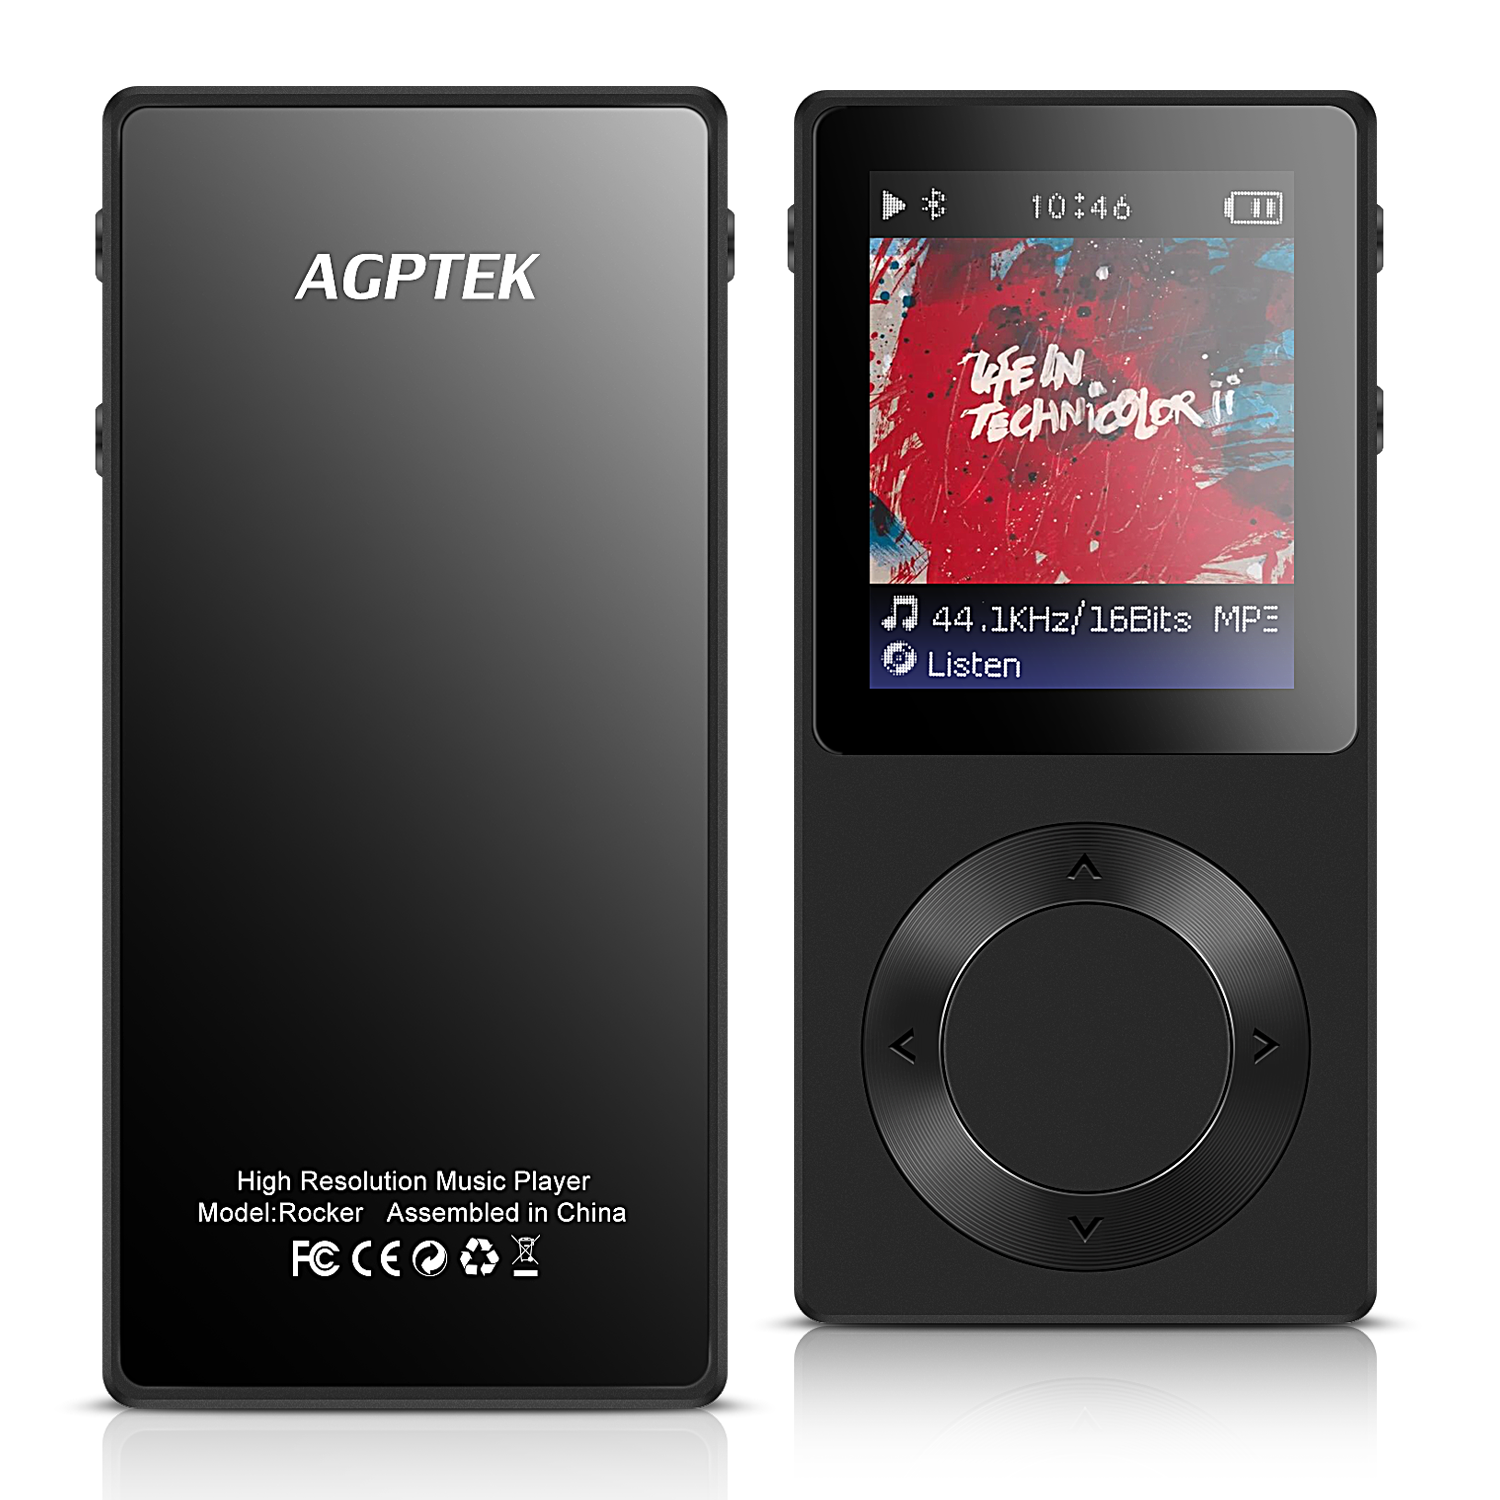 AGPTEK MP3 Player, ROCKER Bluetooth 4.0 Music Player for Audiophile